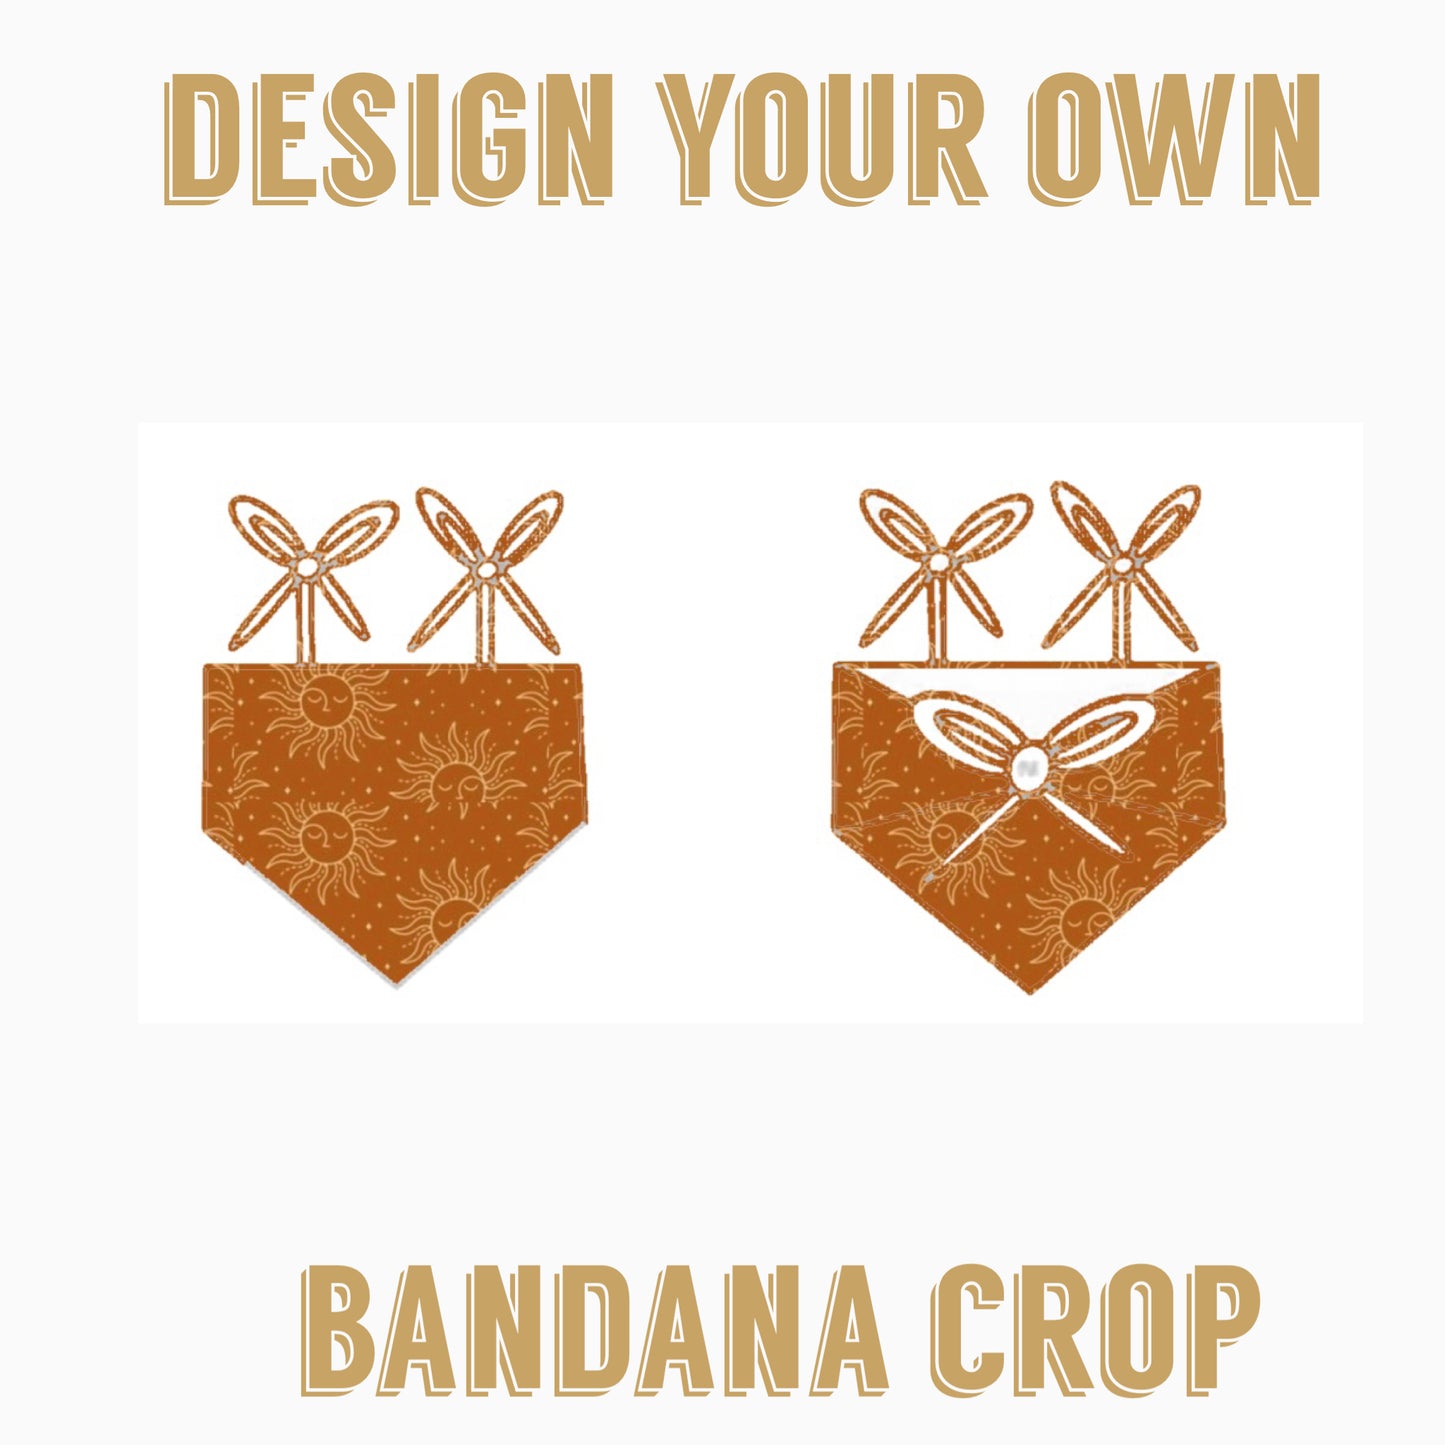 Design your own| Bandana crop